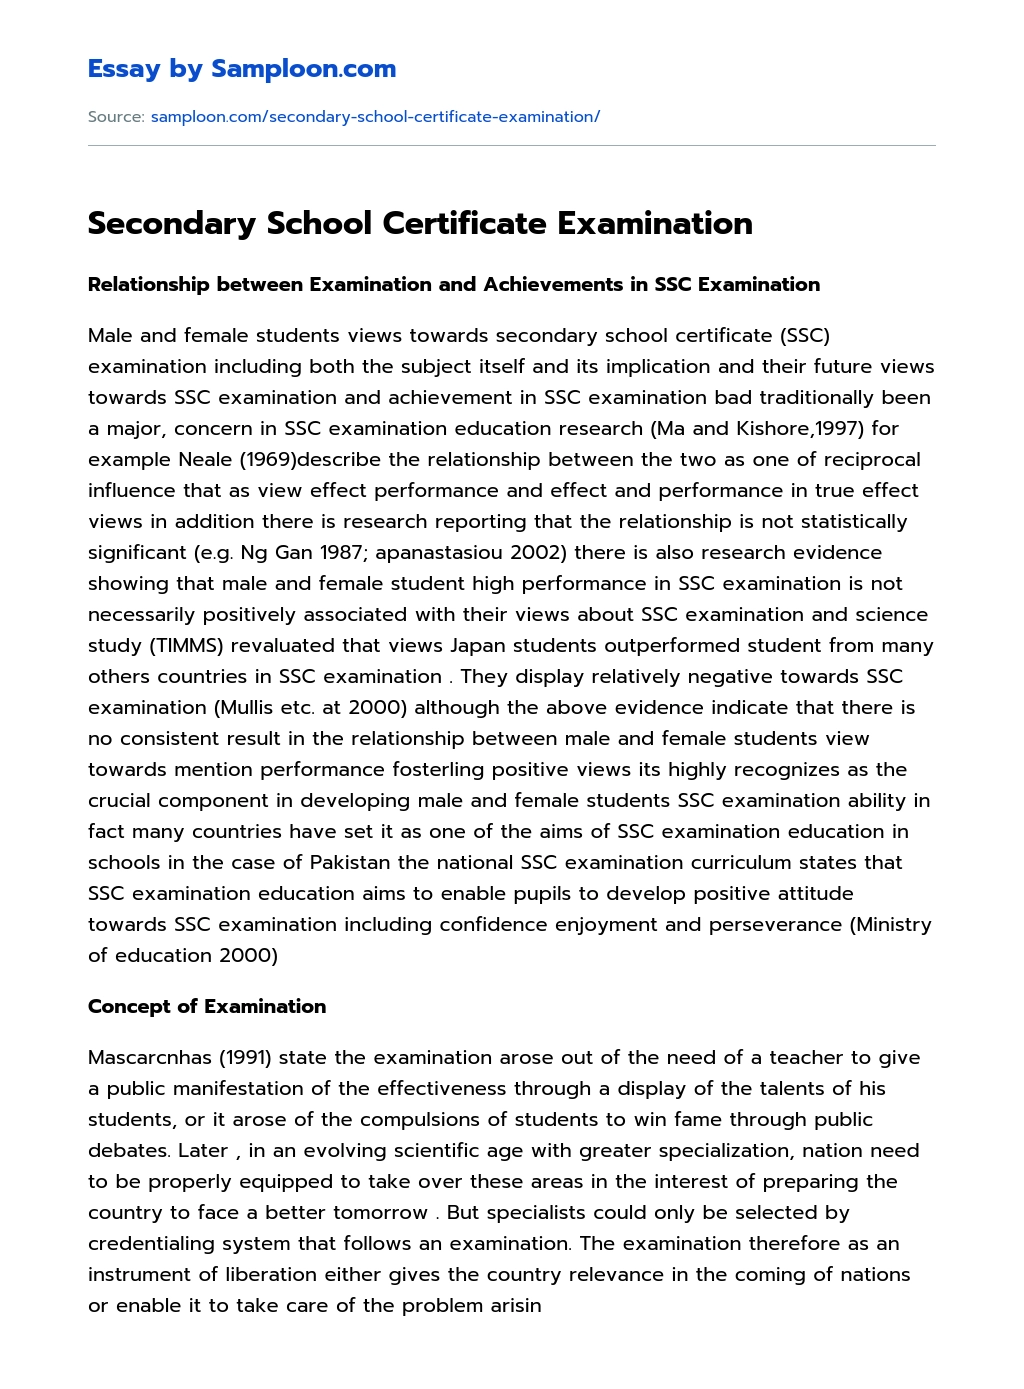 Secondary School Certificate Examination essay